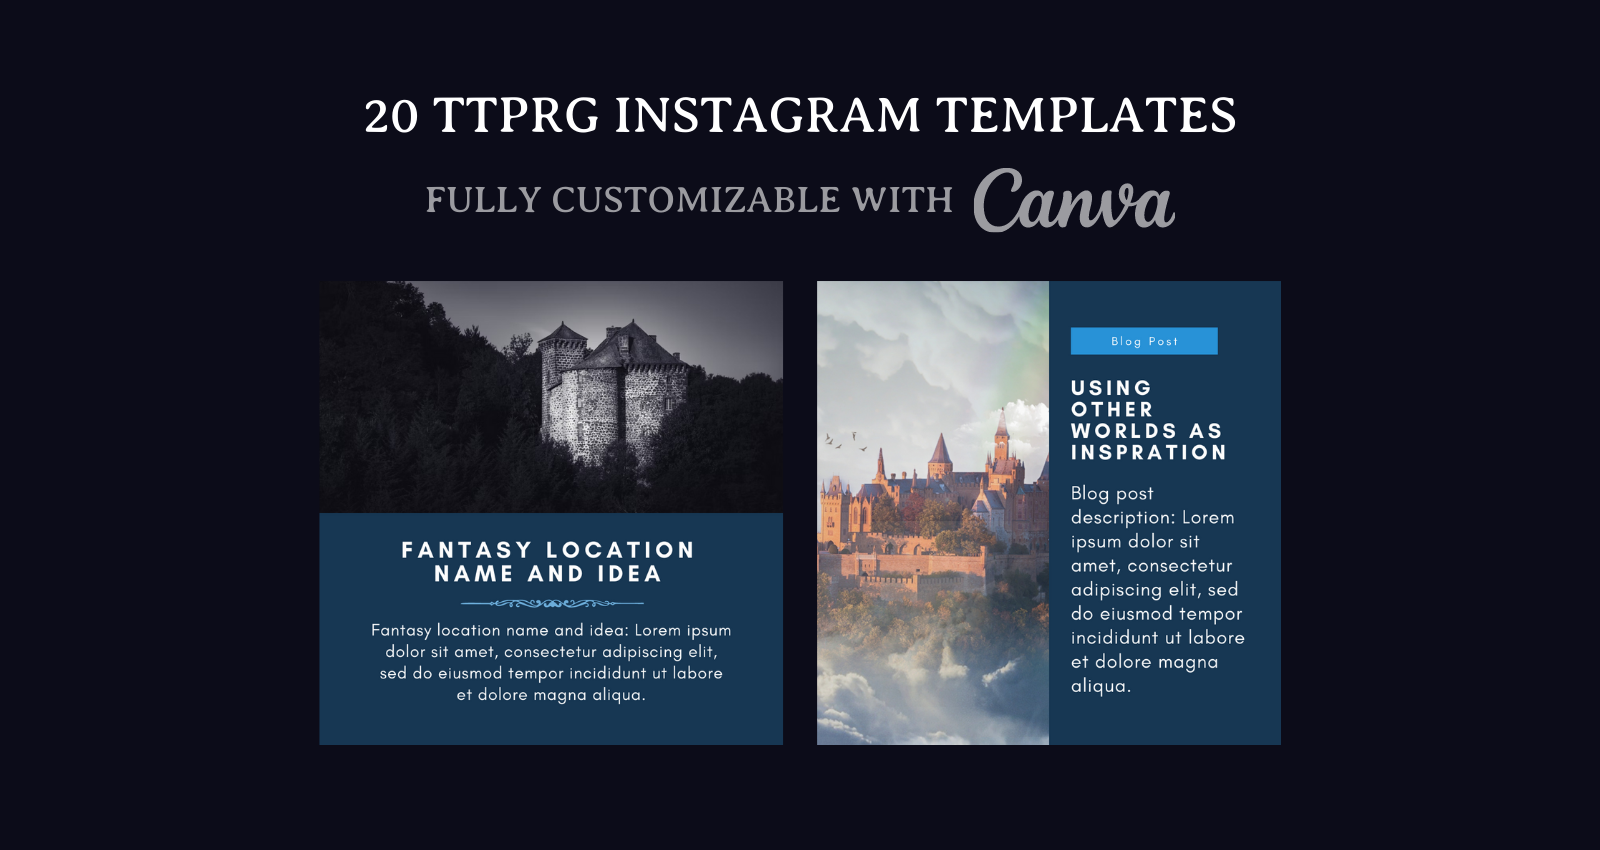 TTRPG Instagram Templates 2